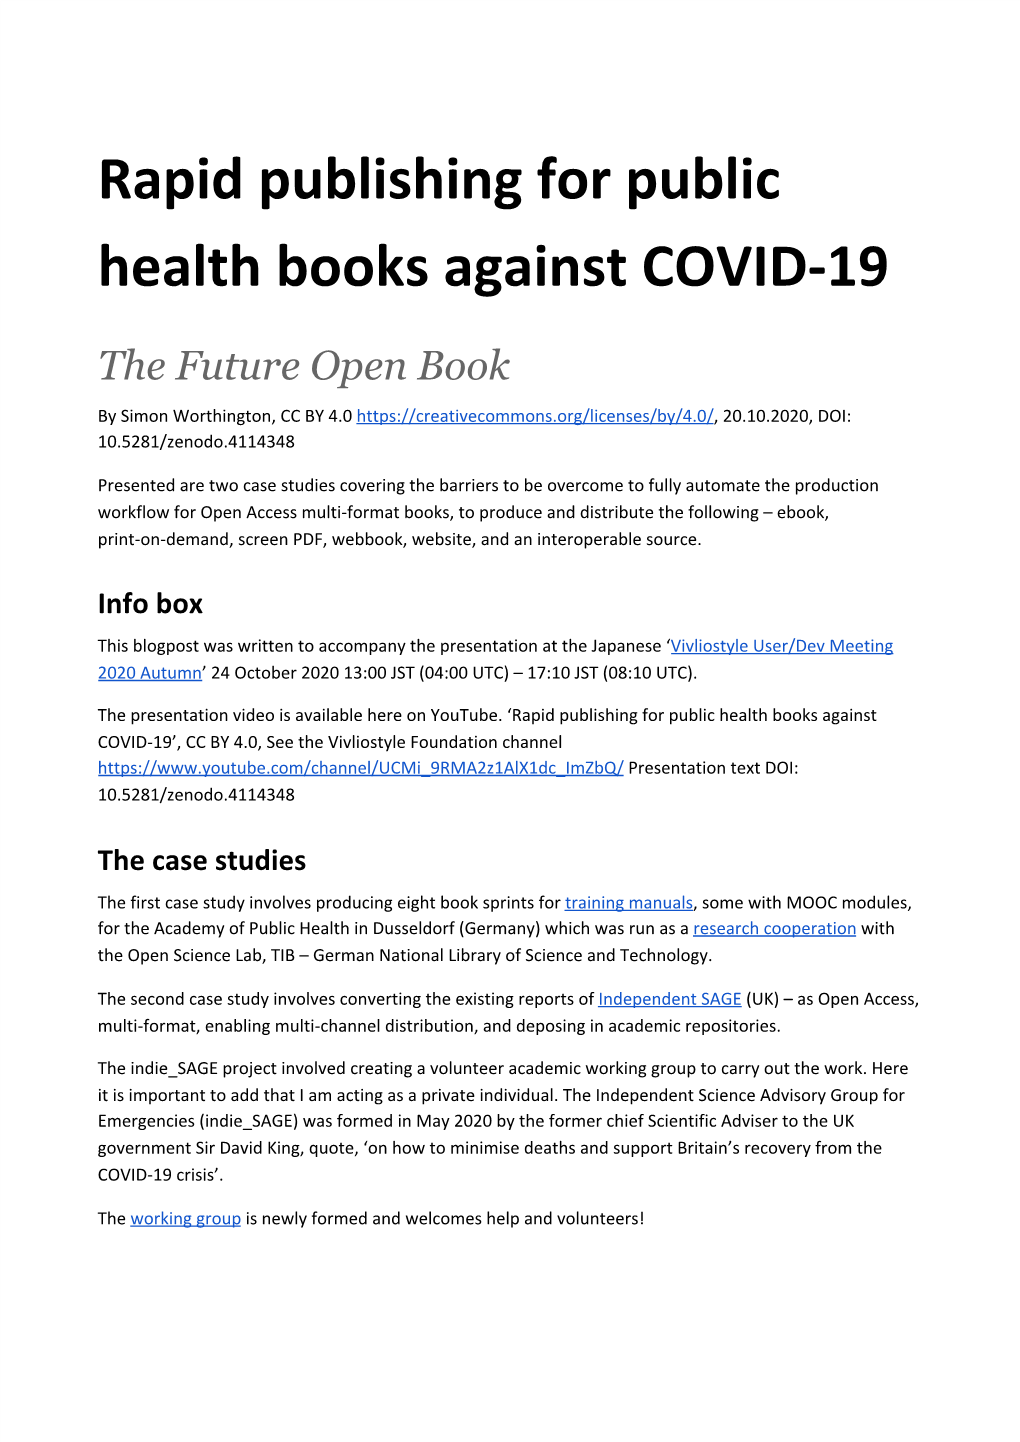 Rapid Publishing for Public Health Books Against COVID-19